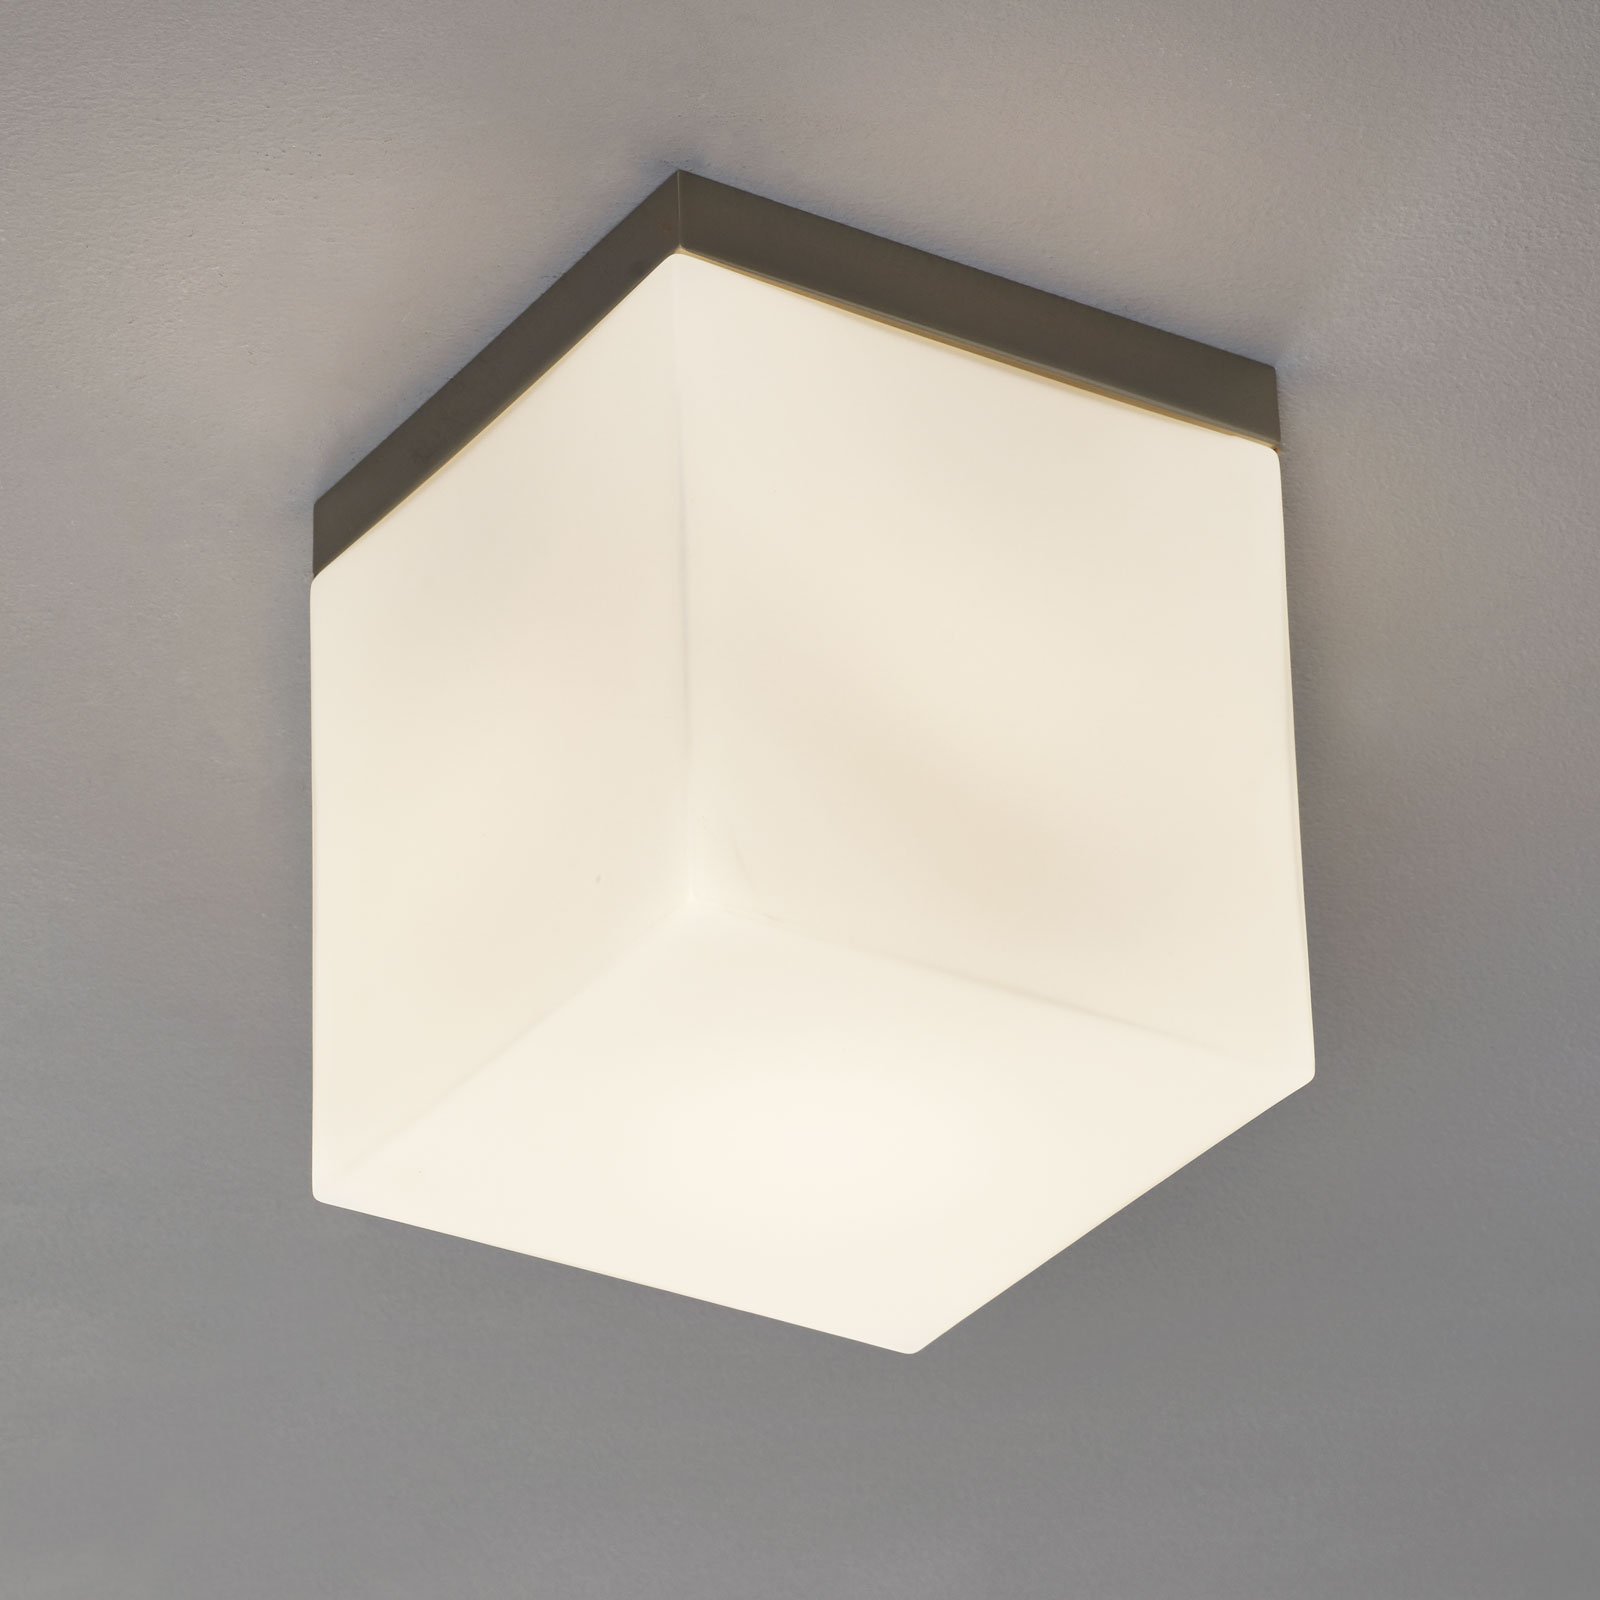 Werkelijk fantastische plafondlamp Livia, 20 cm